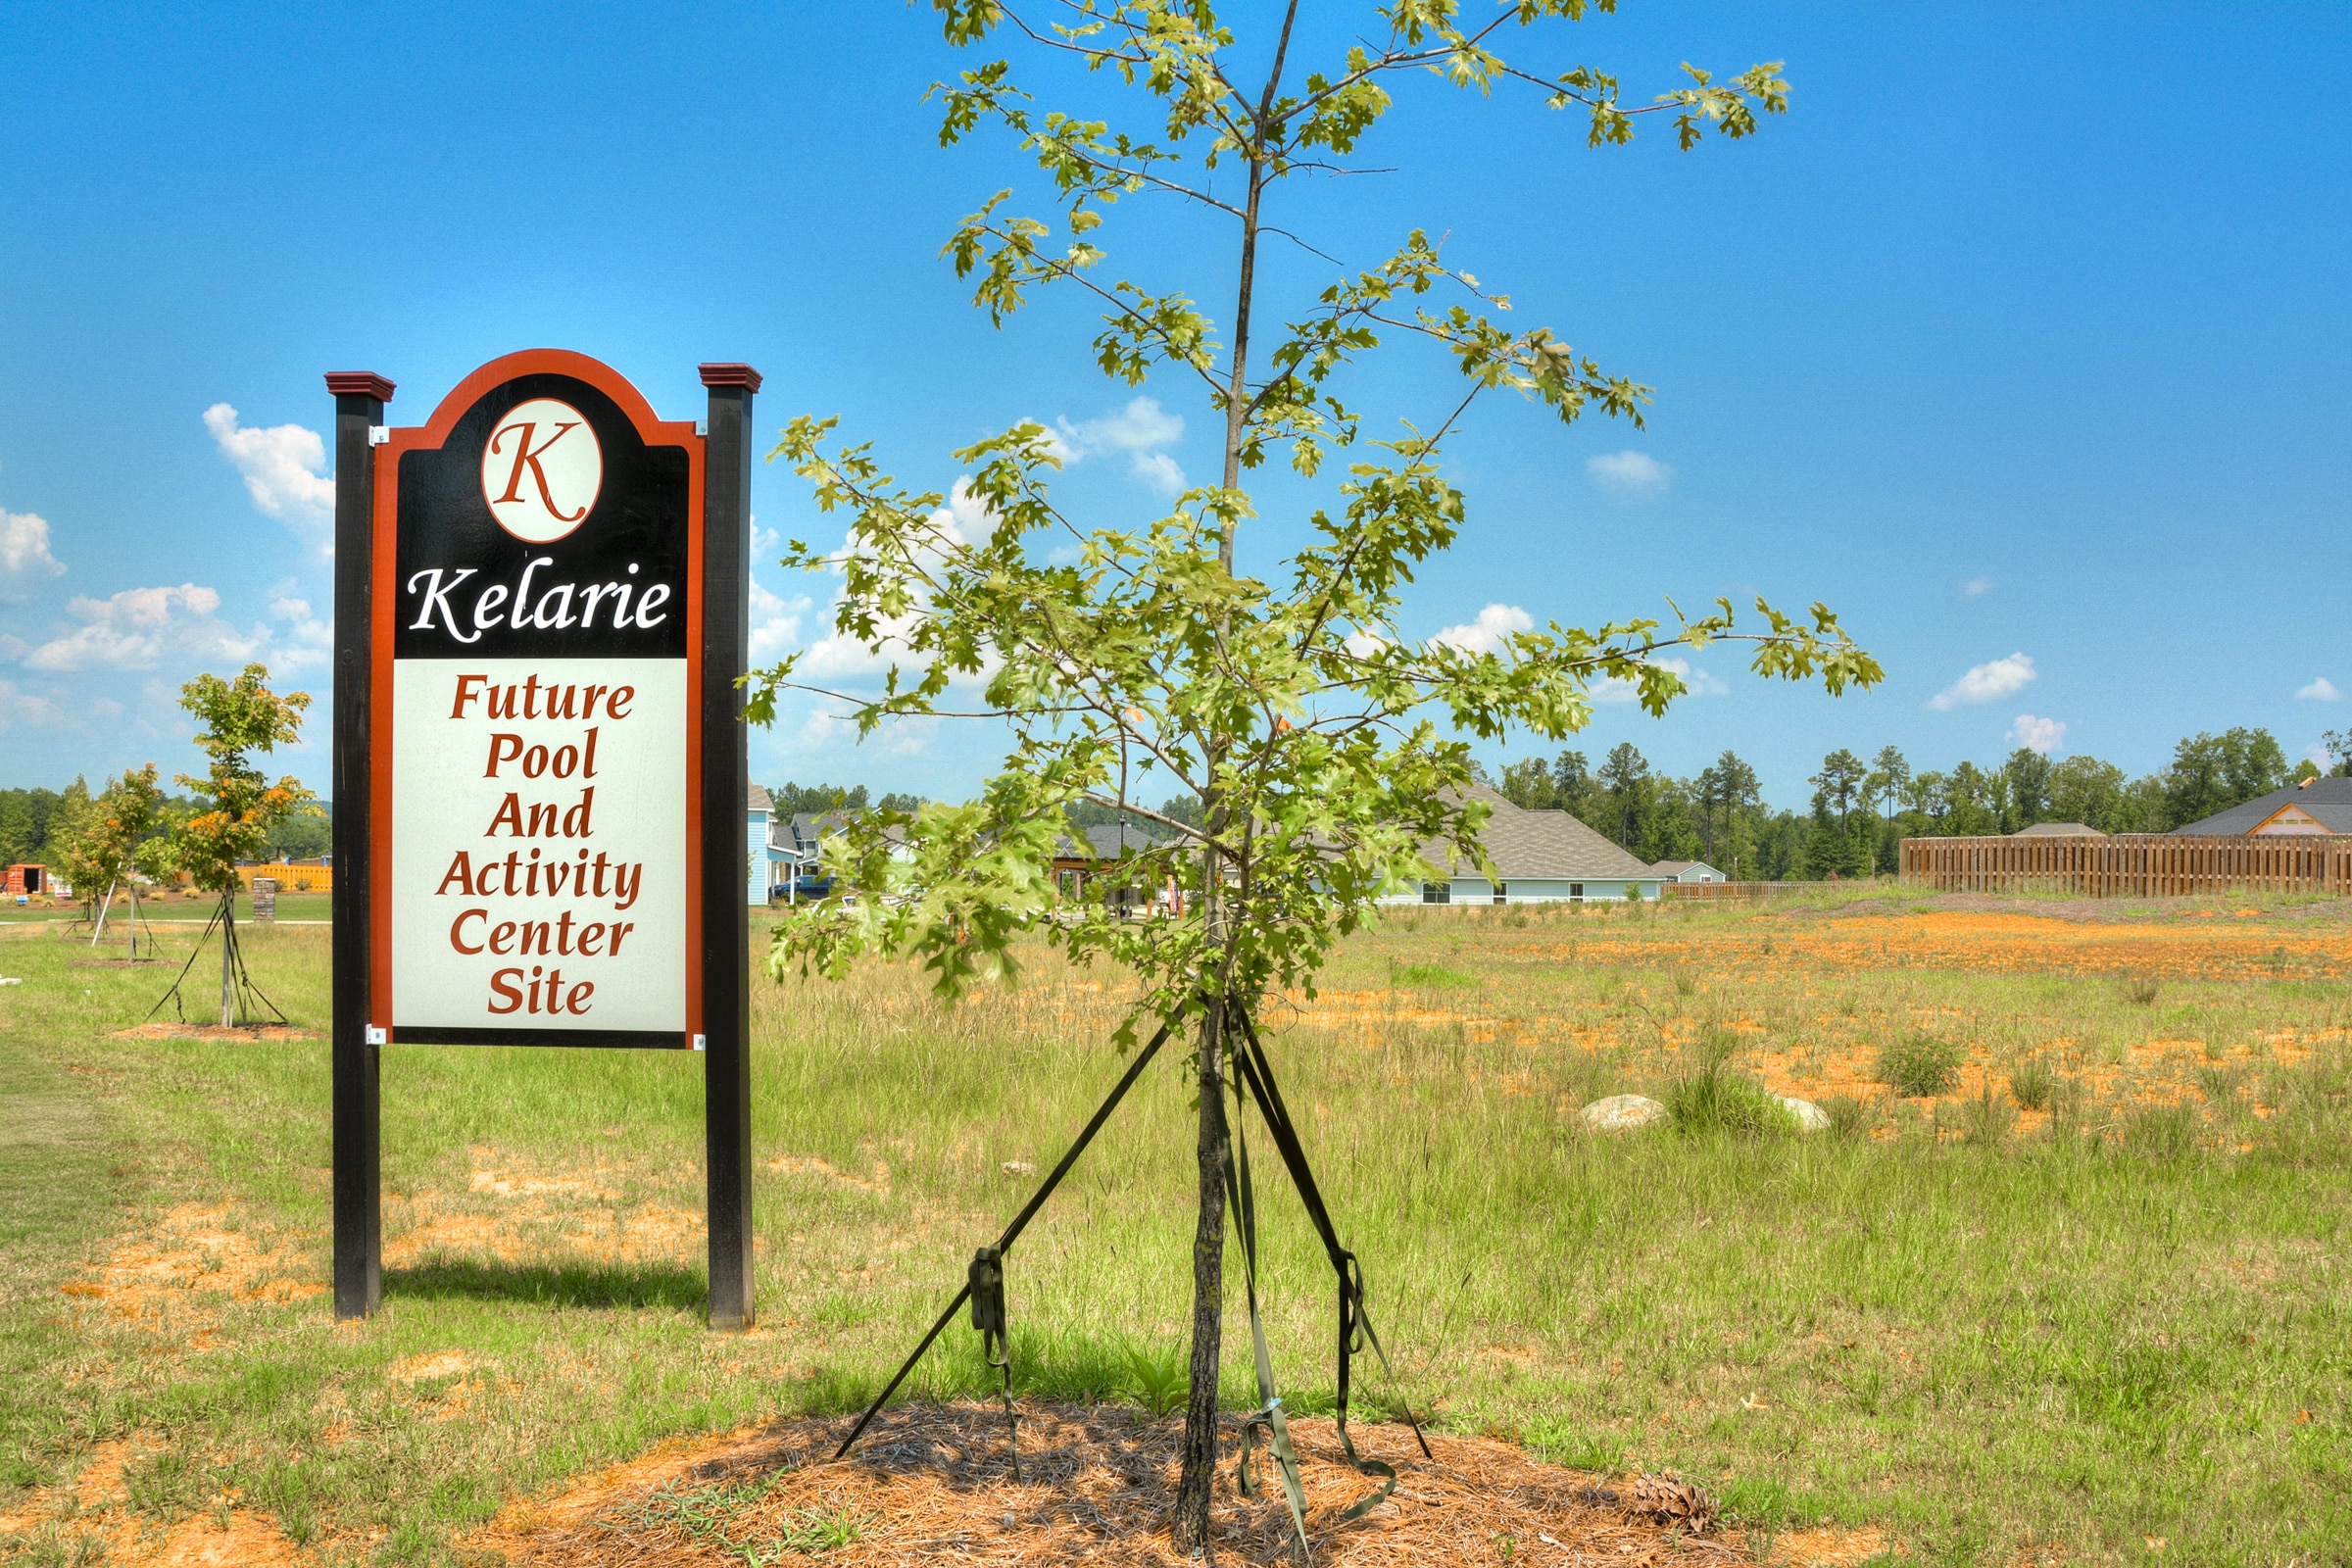 An image of the Kelarie neighborhood sign in development.